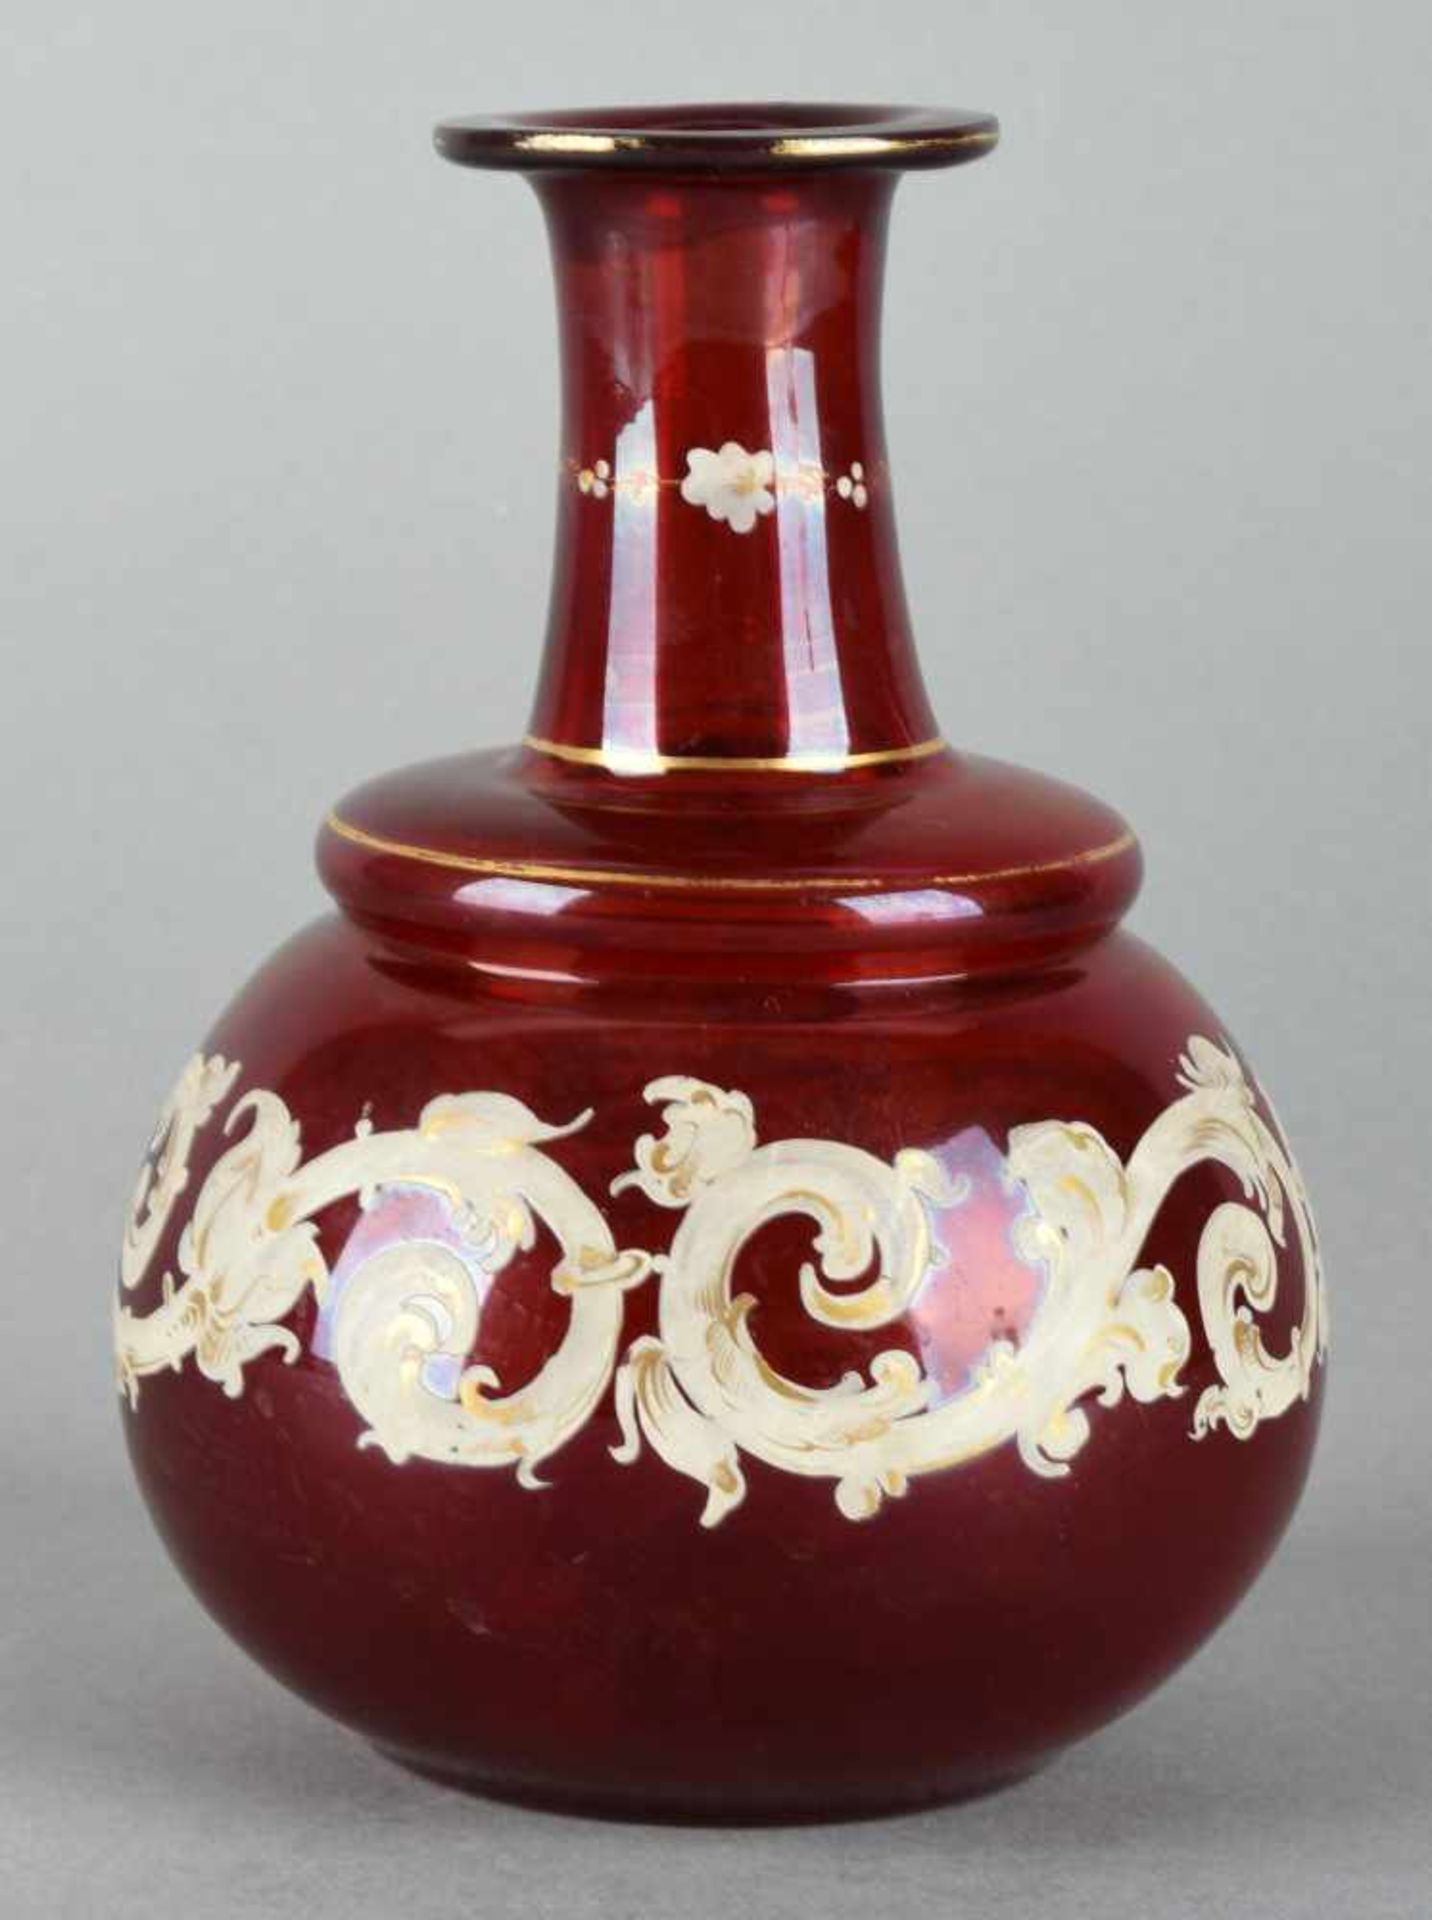 Spätbiedermeier-Karaffe farbloses Abrissglas rubinrot gebeizt, über gedrückter Kugelform hoher, - Bild 2 aus 2